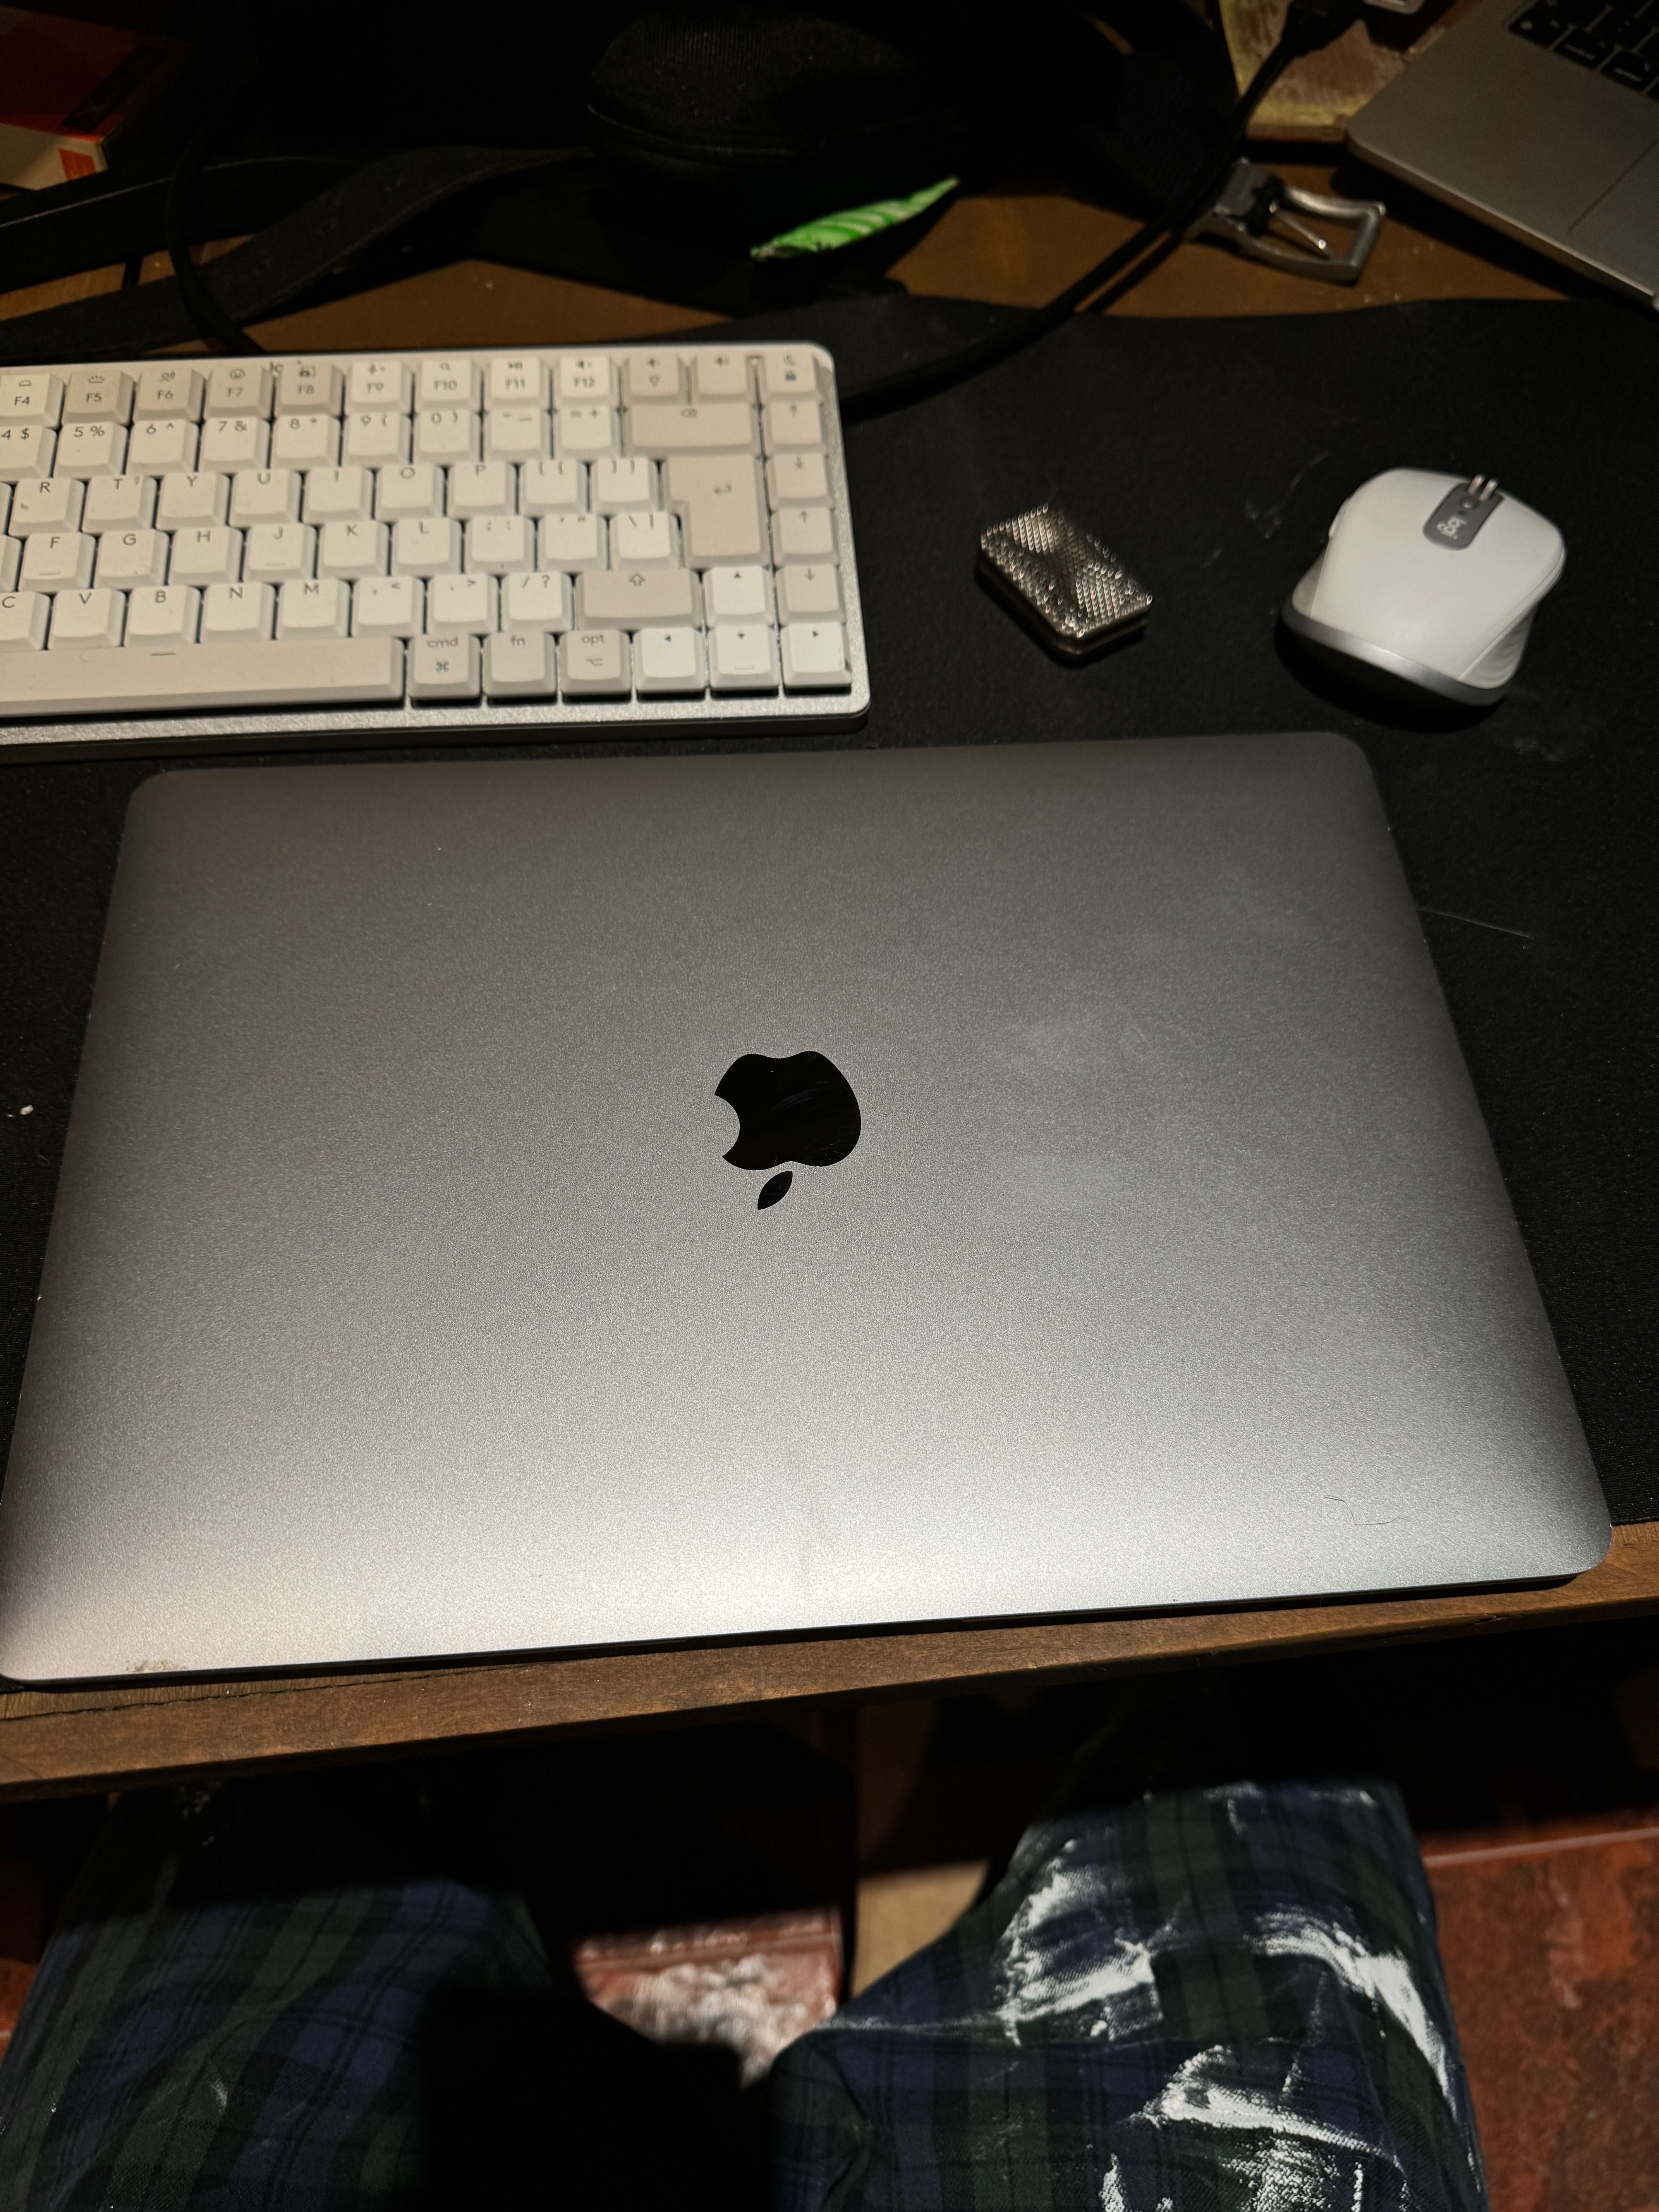 M1 MacBook Air 97% battery health 250GB 13inch 8 GB - Space Gray